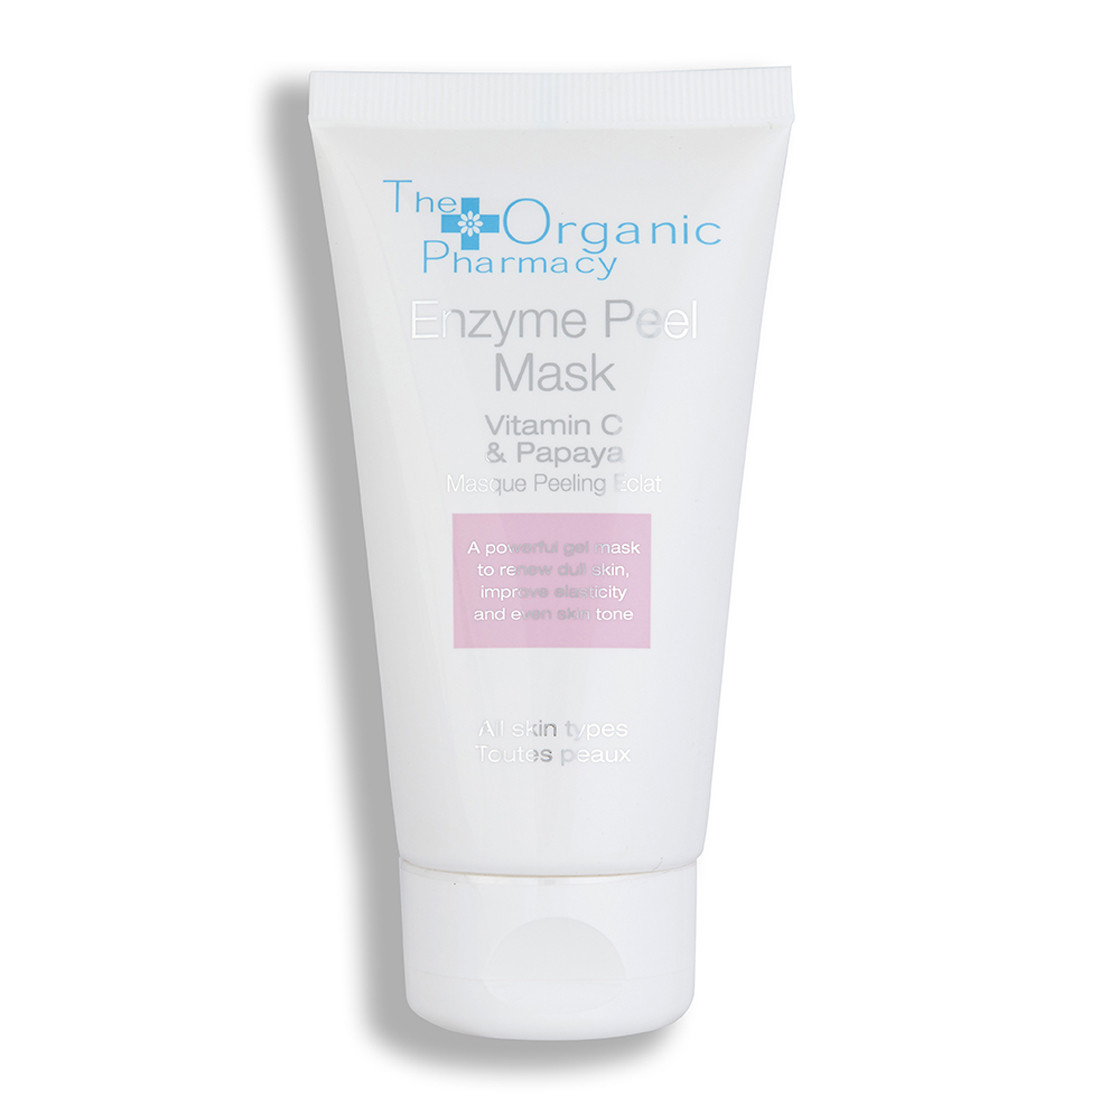 The Organic Pharmacy Enzyme Peel Mask with Vitamin C and Papaya Энзимная пилинг-маска